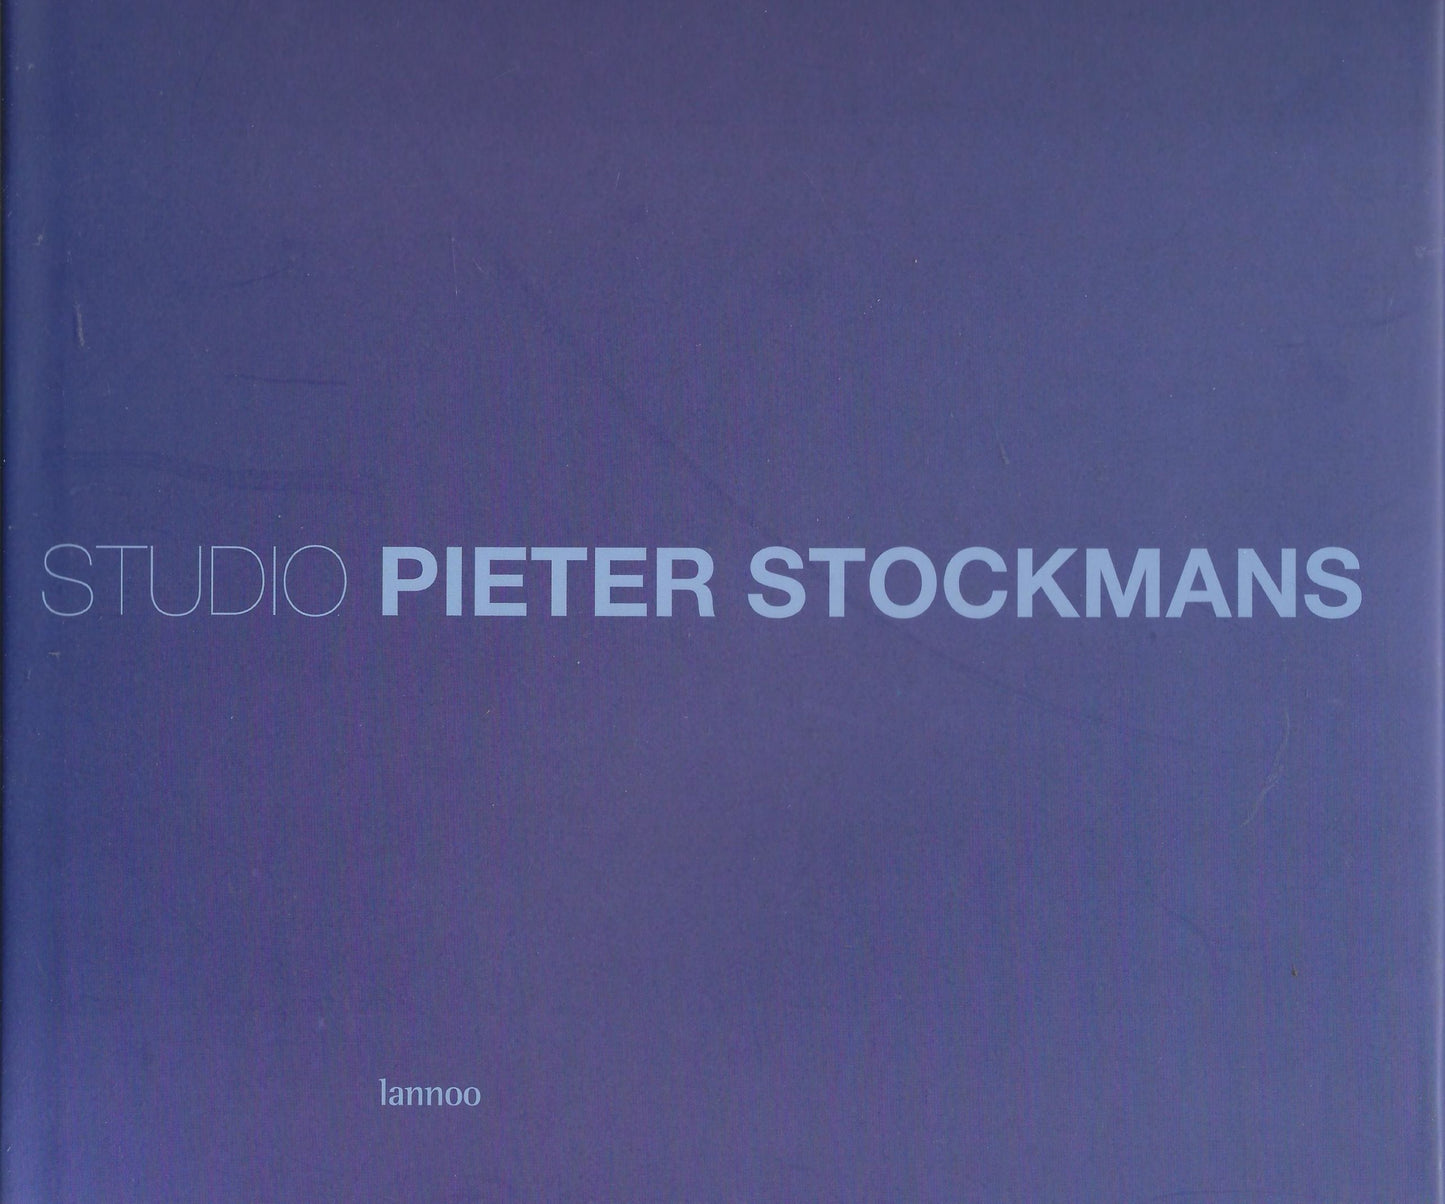 Studio Pieter Stockmans